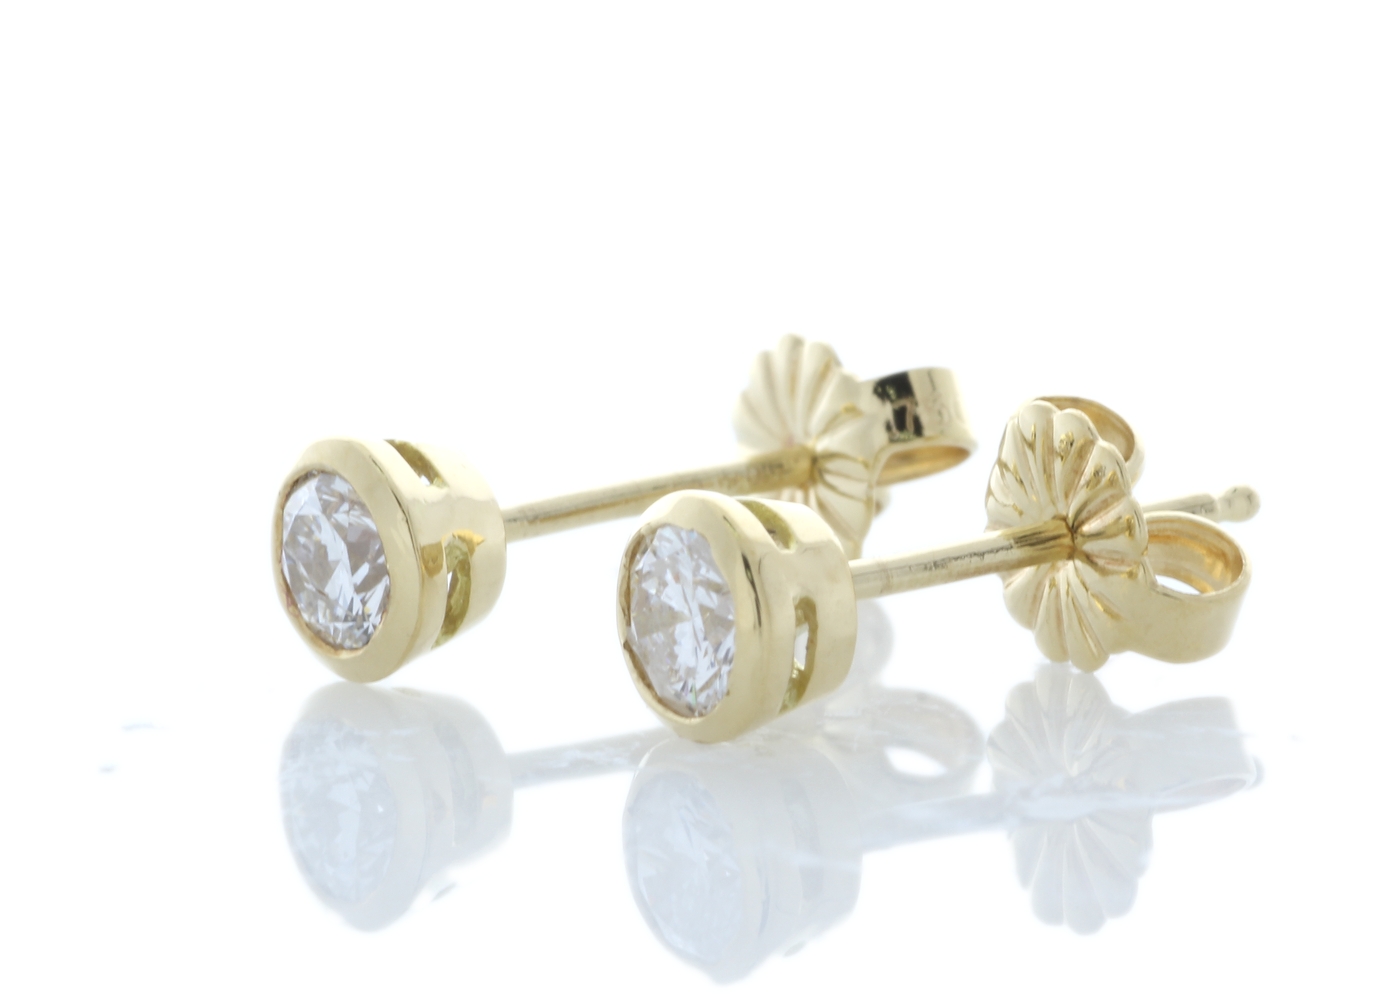 18ct Yellow Gold Rub Over Set Diamond Earrings 0.50 Carats - Image 4 of 5